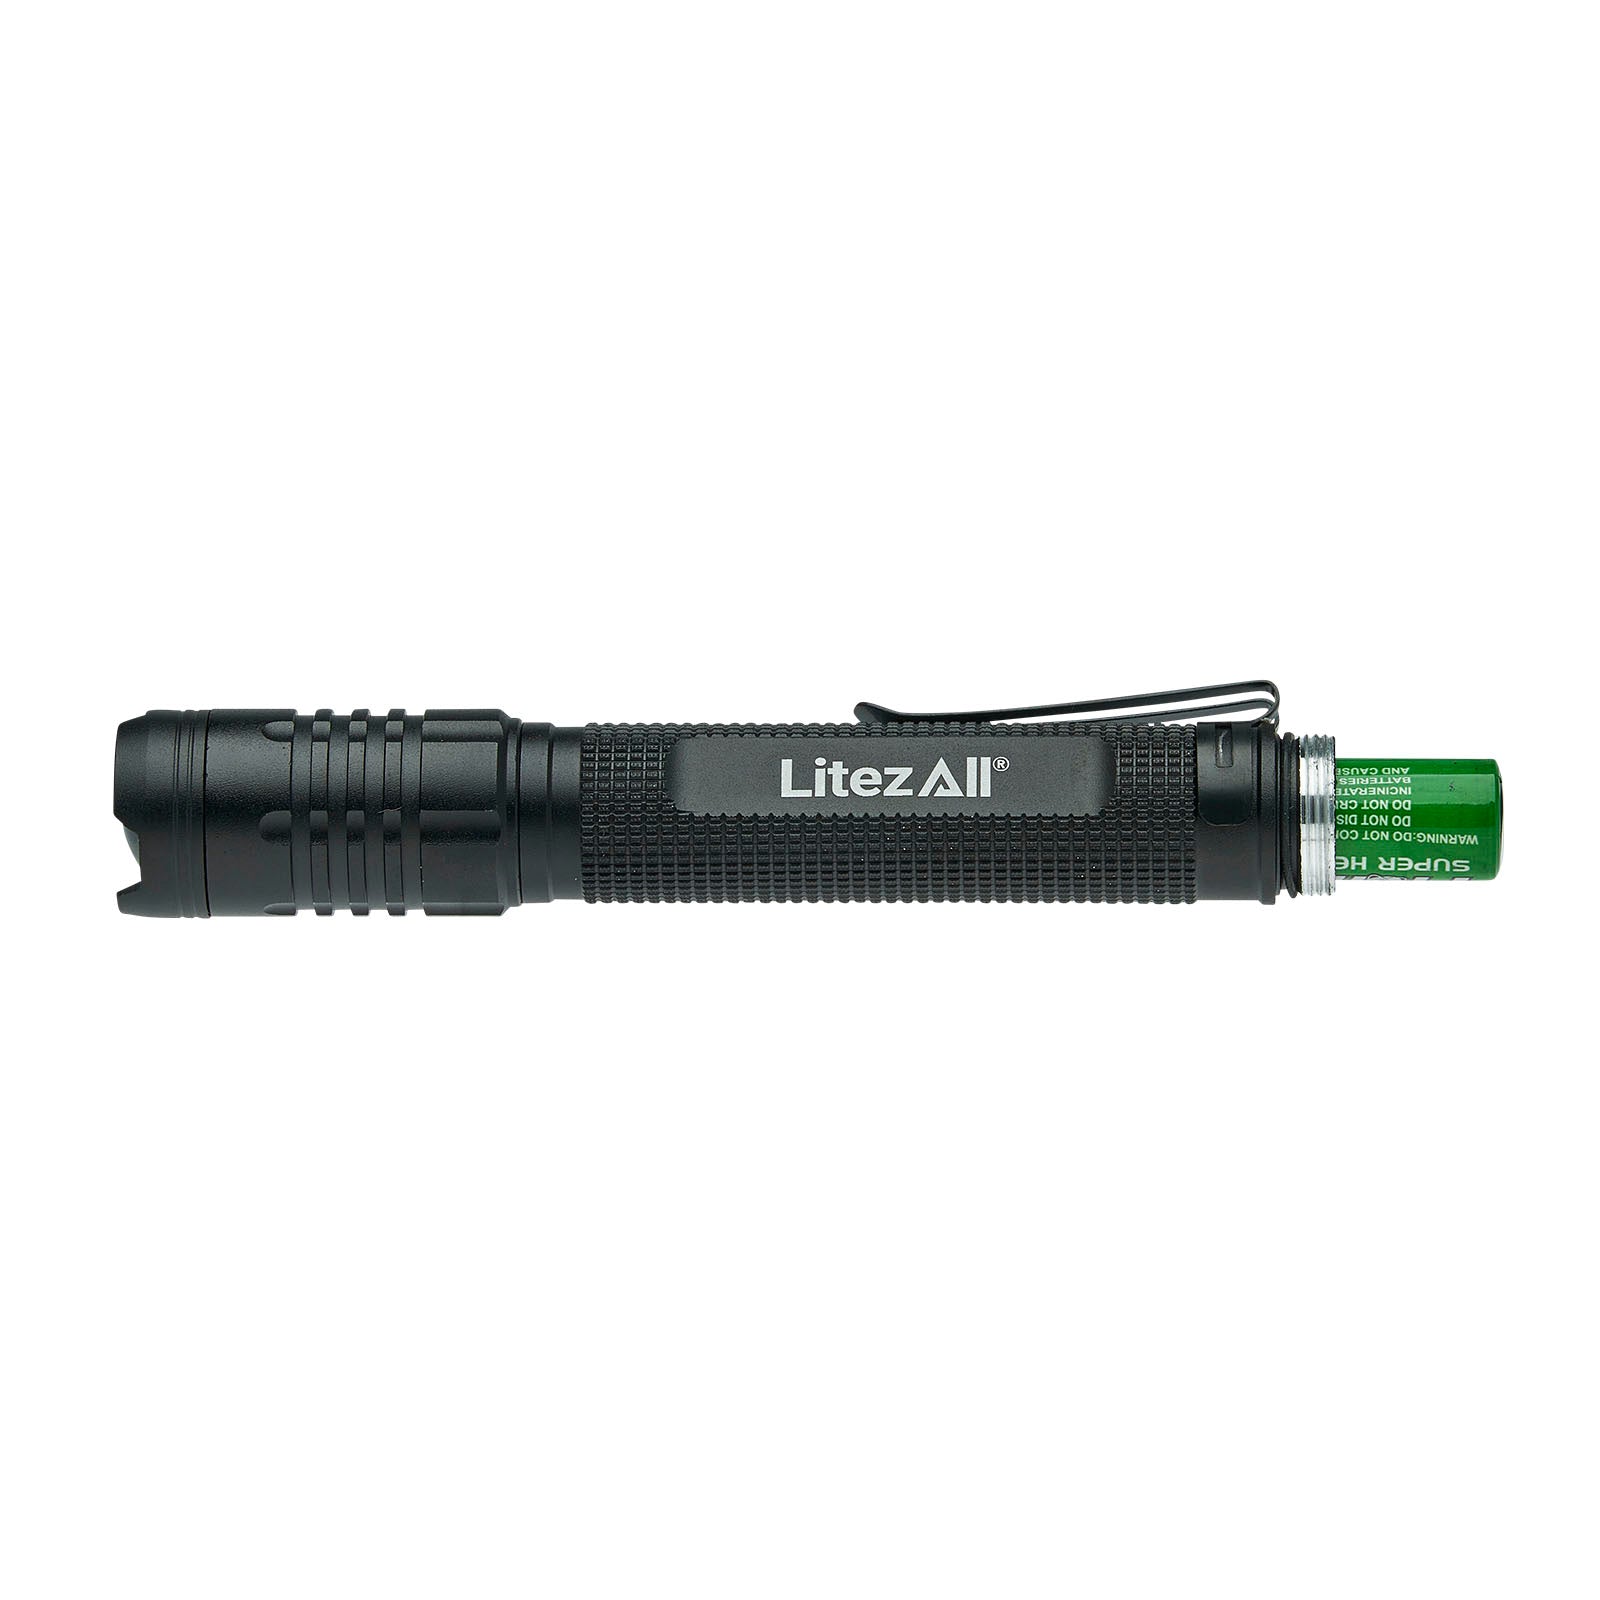 LitezAll 280 Lumen Tactical Flashlight and Pocket Knife Combo - LitezAll - Combo - 10